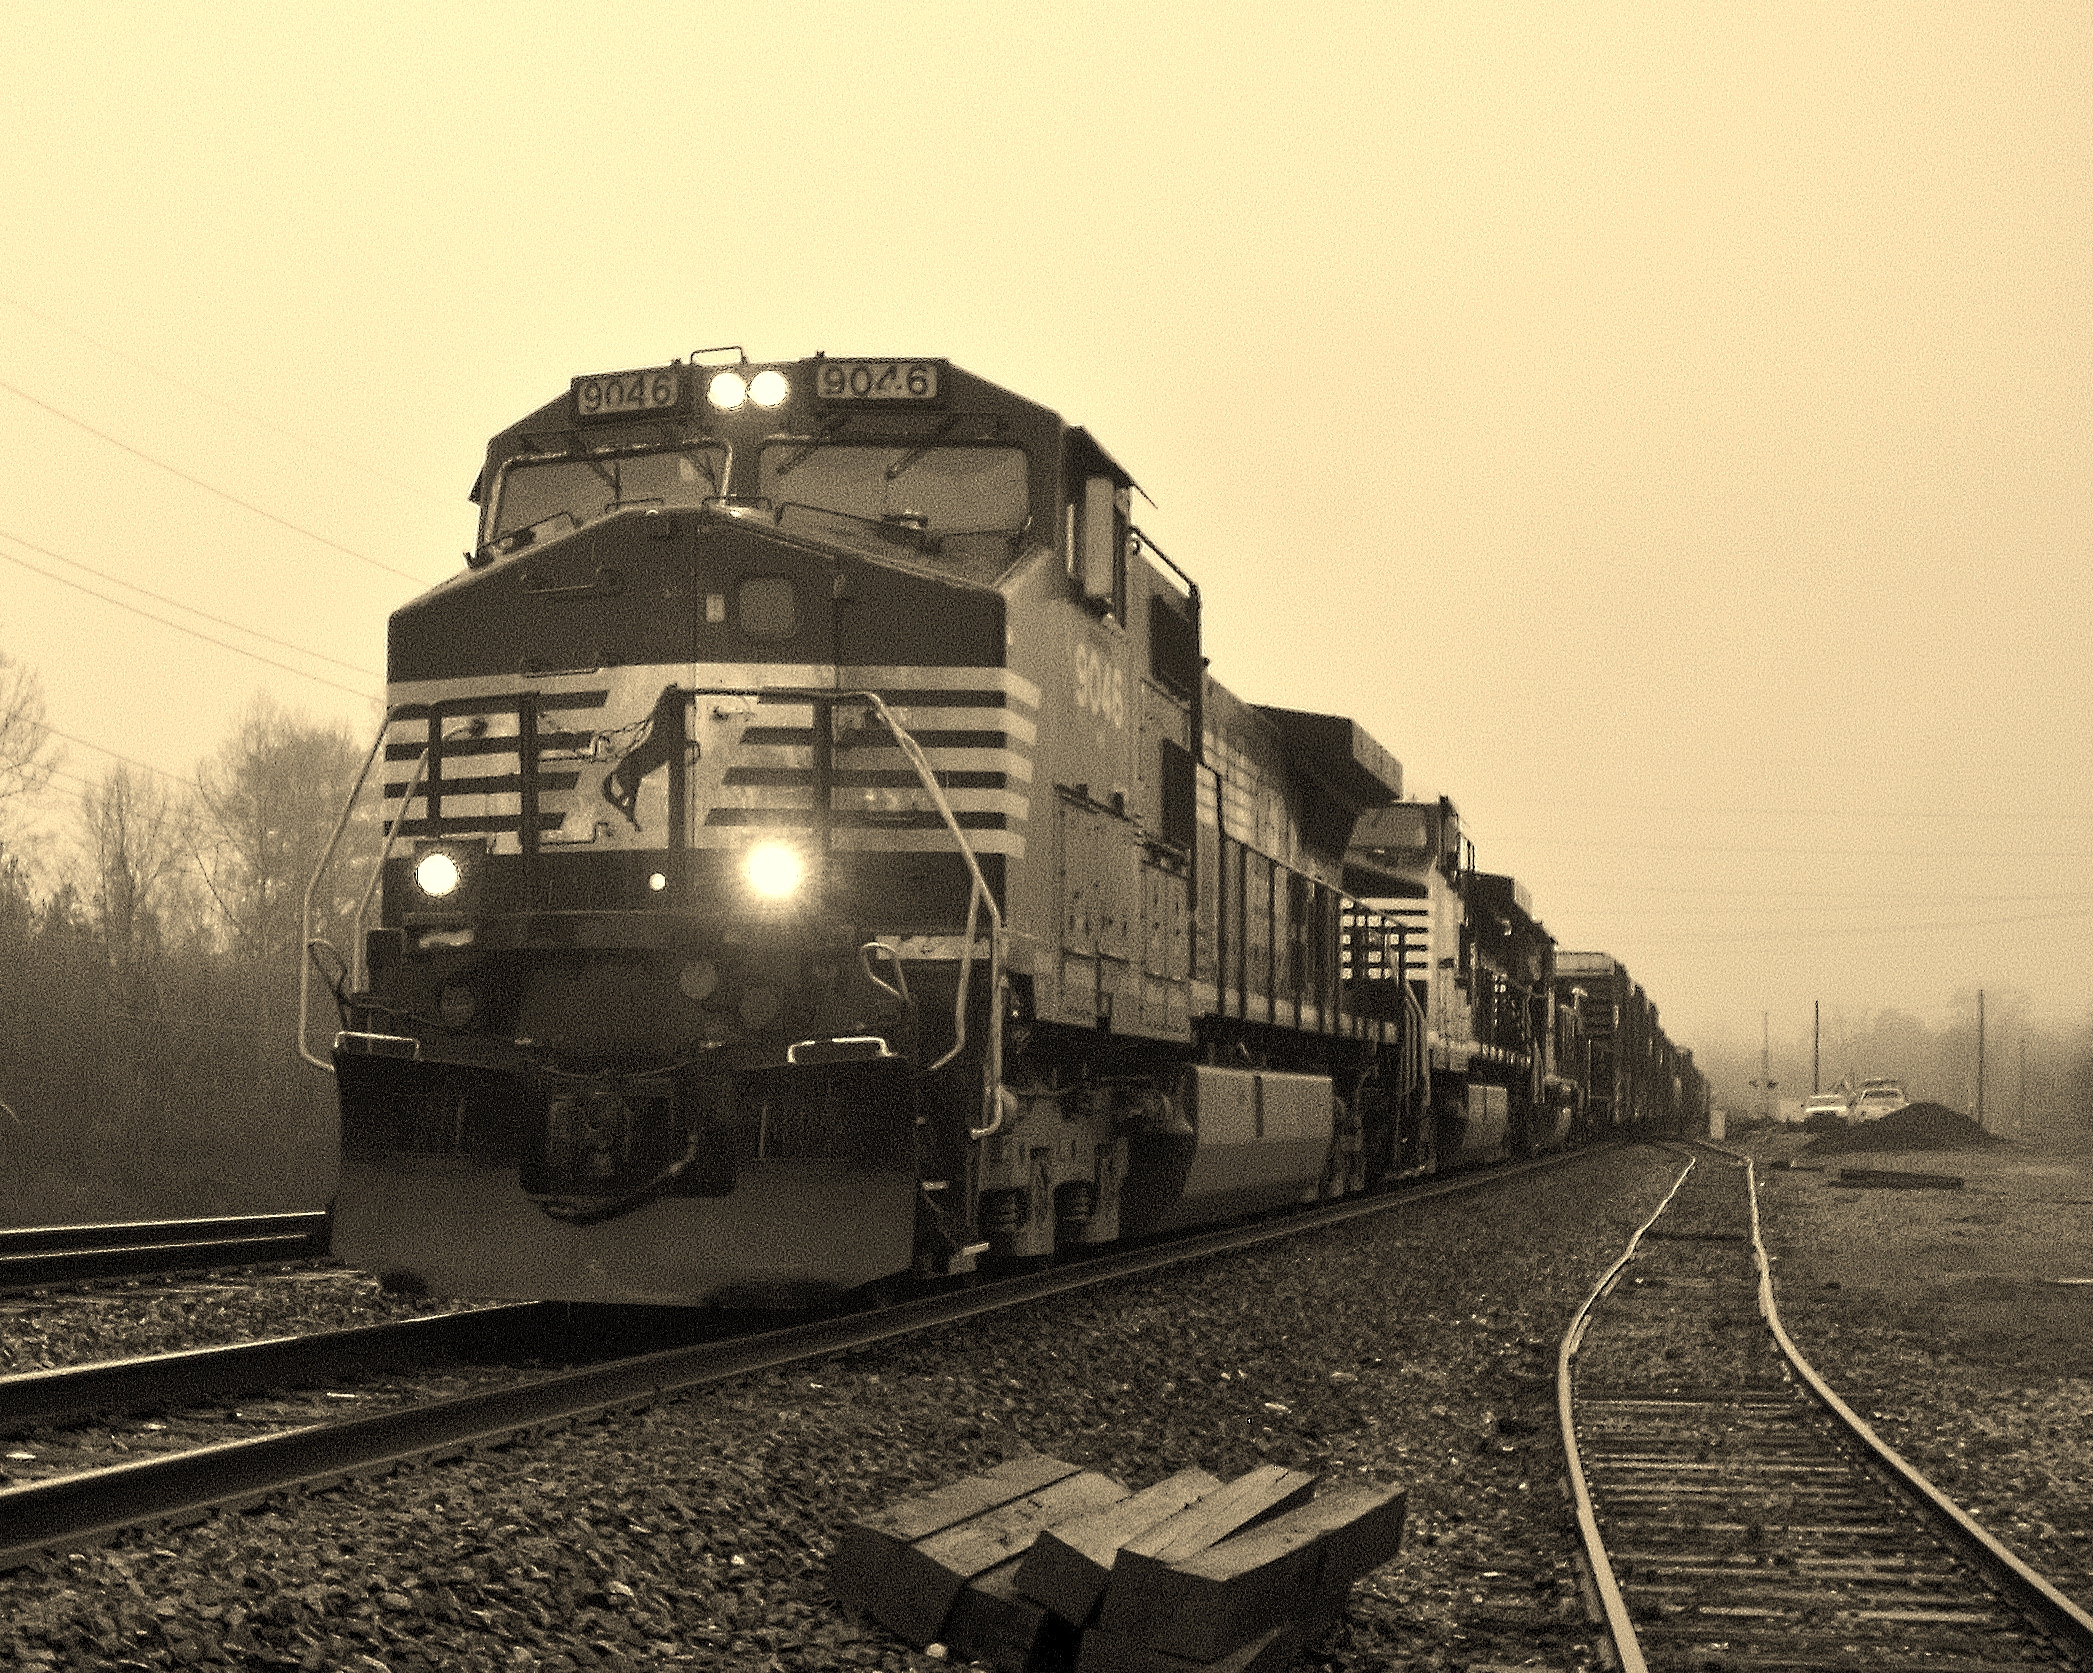 a train traveling down tracks through a foggy forest